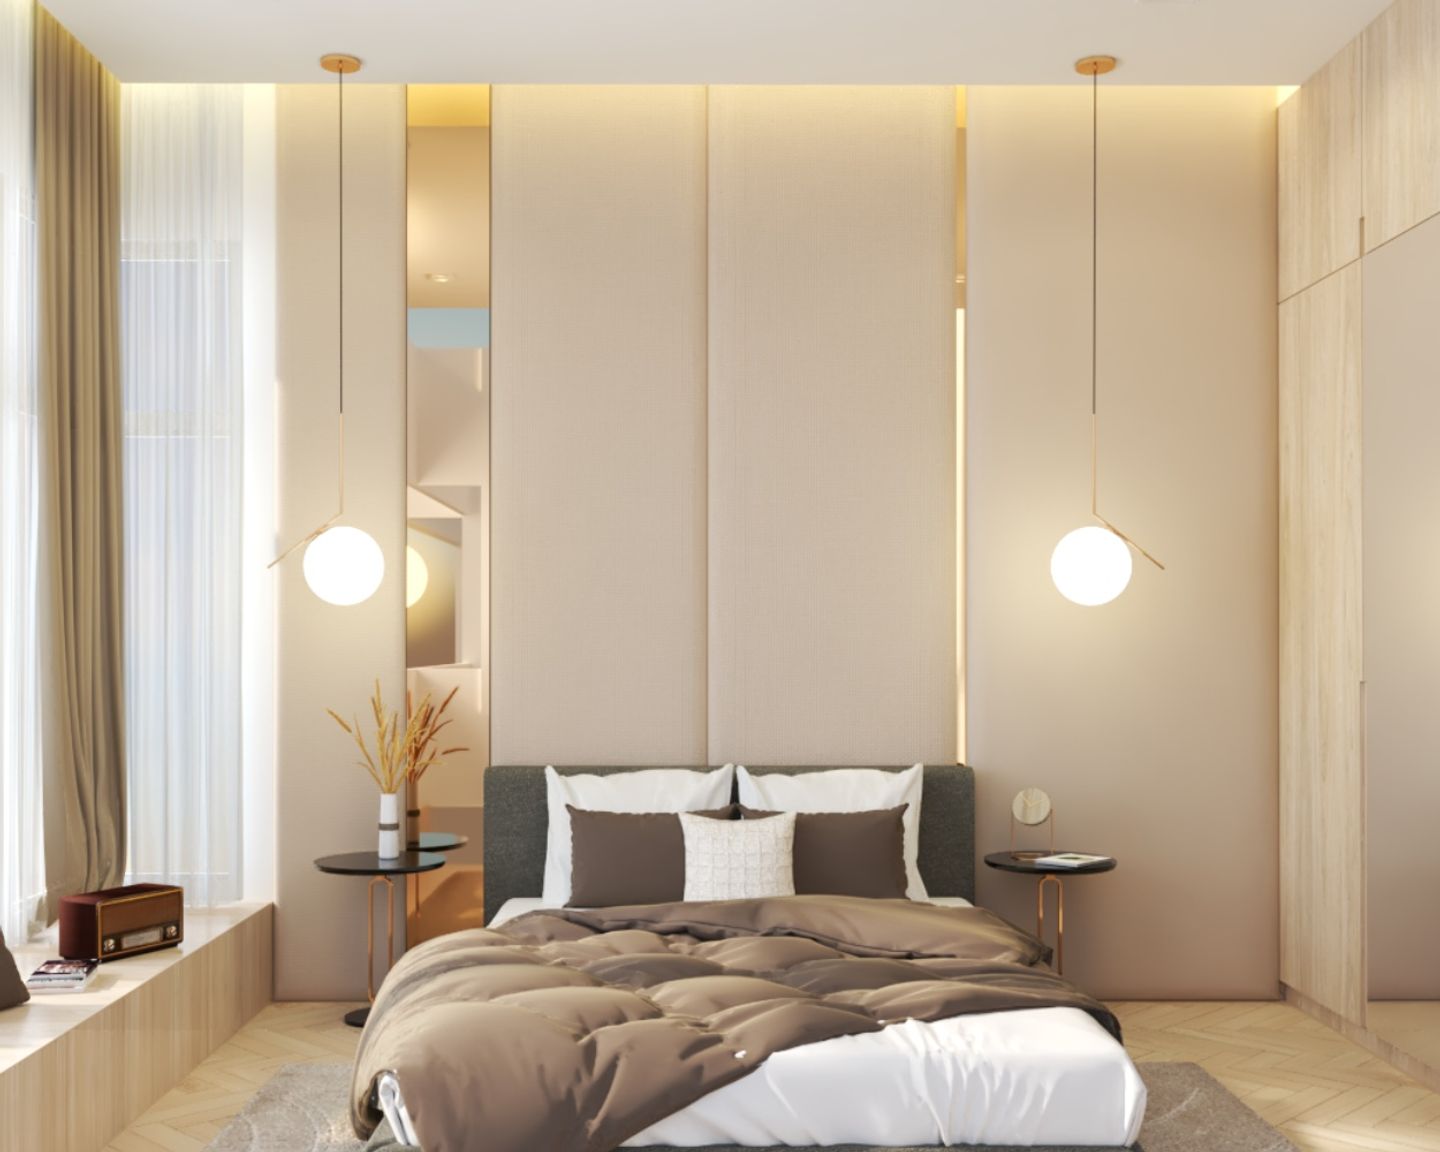 Modern Wall Design In Light Beige - Livspace